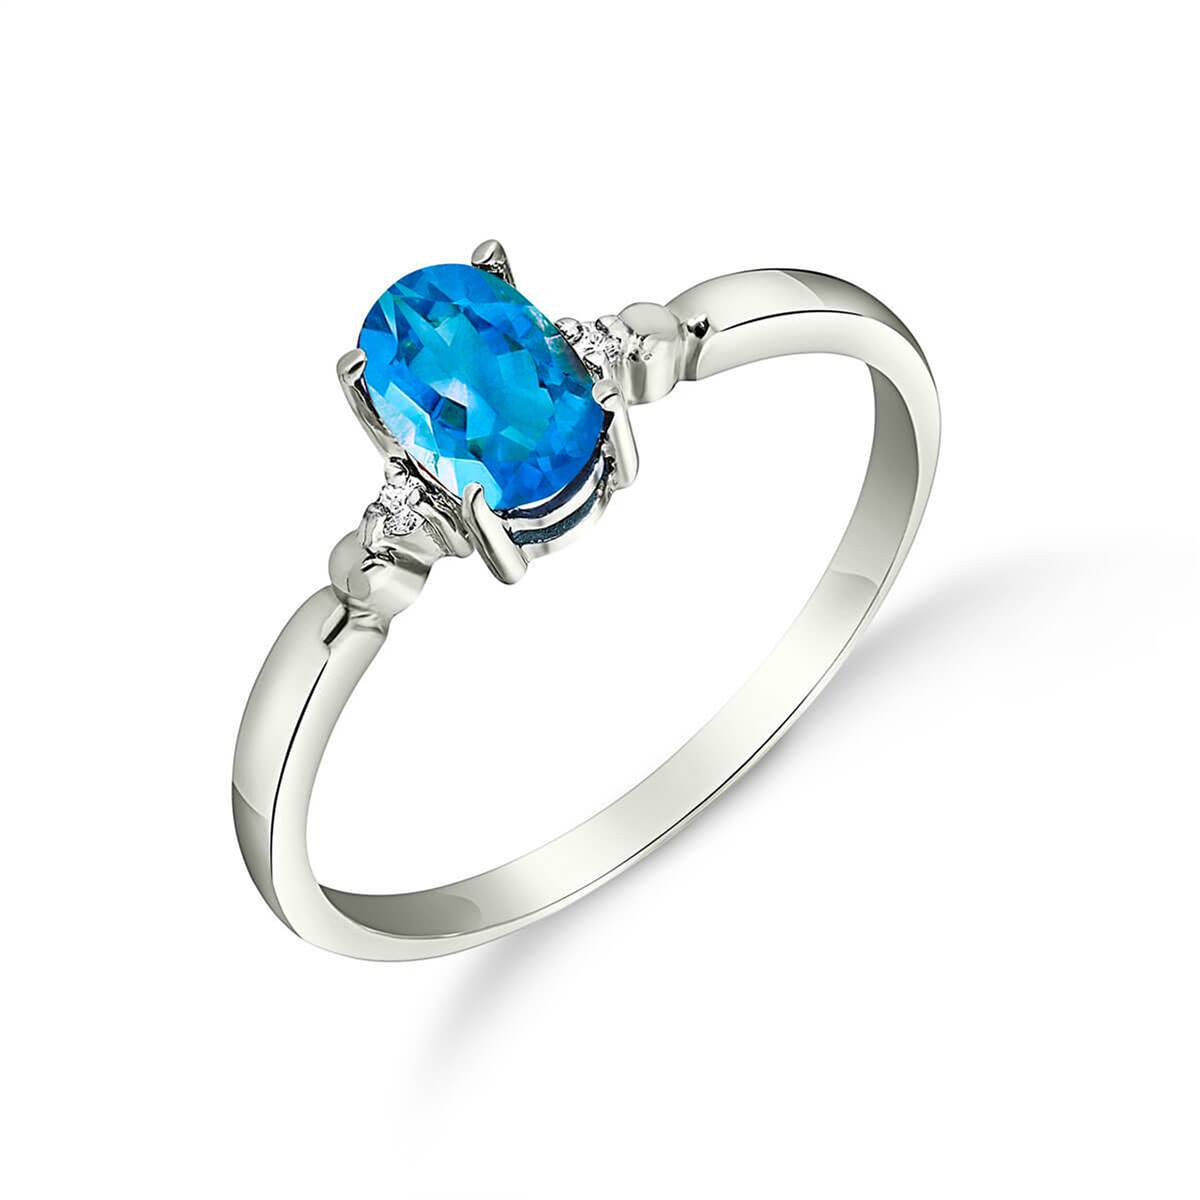 0.46 Carat 14K Solid White Gold Glimpse Into Life Blue Topaz Diamond Ring